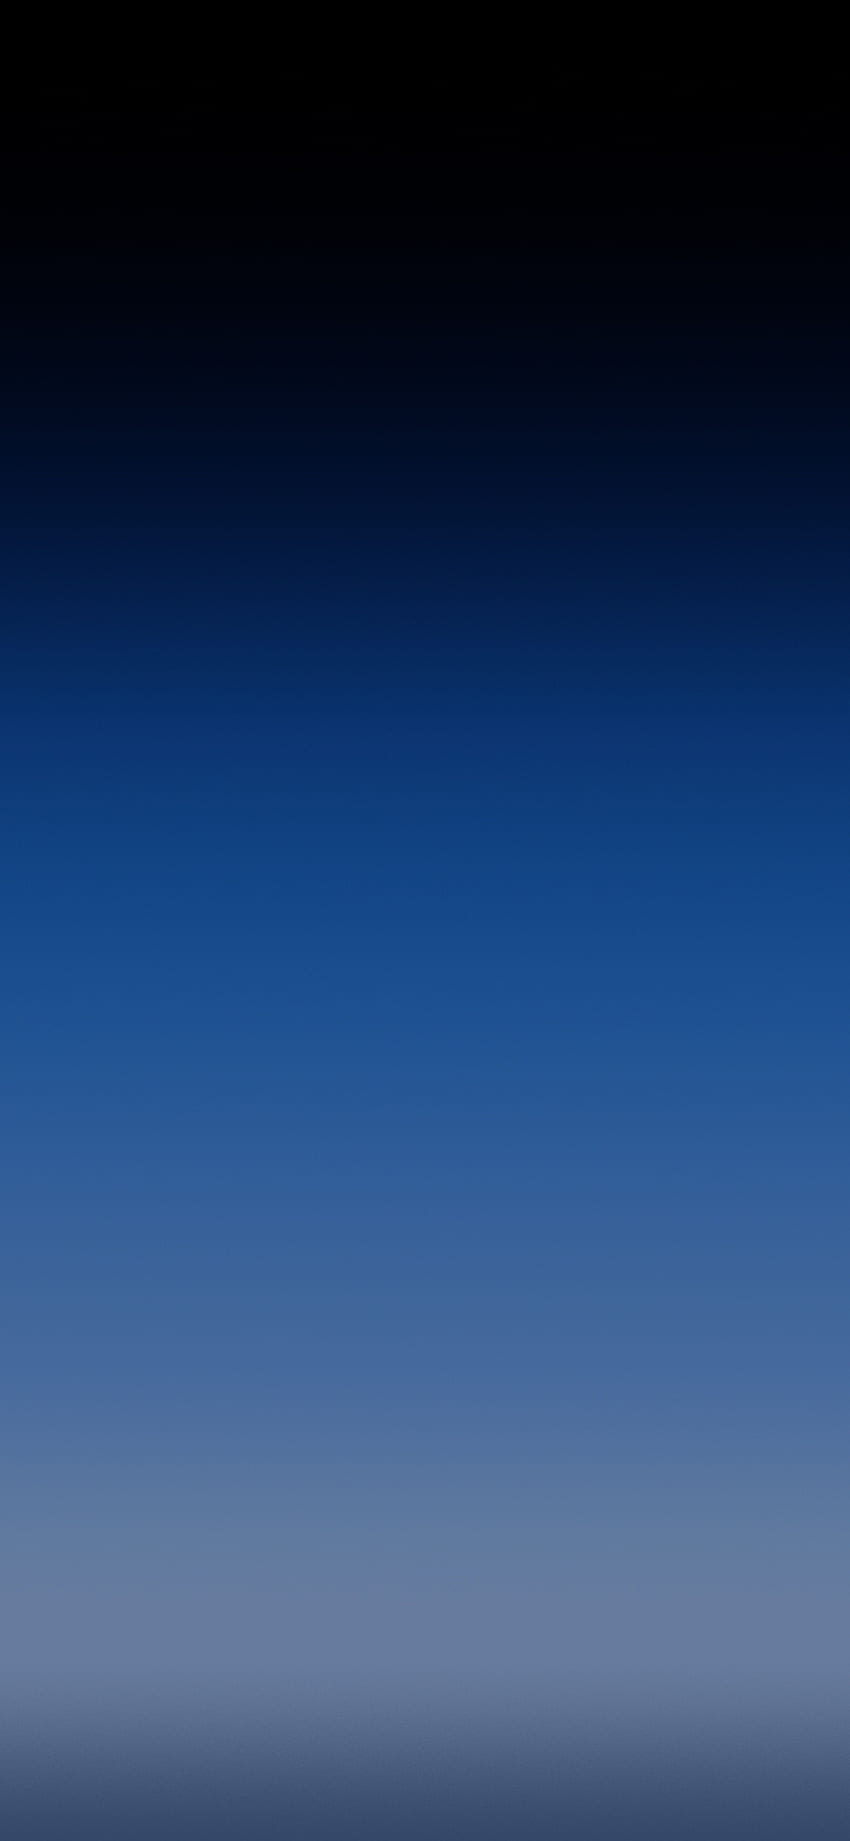 IPhone X z minimalnym gradientem autorstwa Danielghuffmana Light 3375 × 7308 pikseli. Niebieski Iphone, Ombre Iphone, IPhone, Czarno-biały Gradient Tapeta na telefon HD